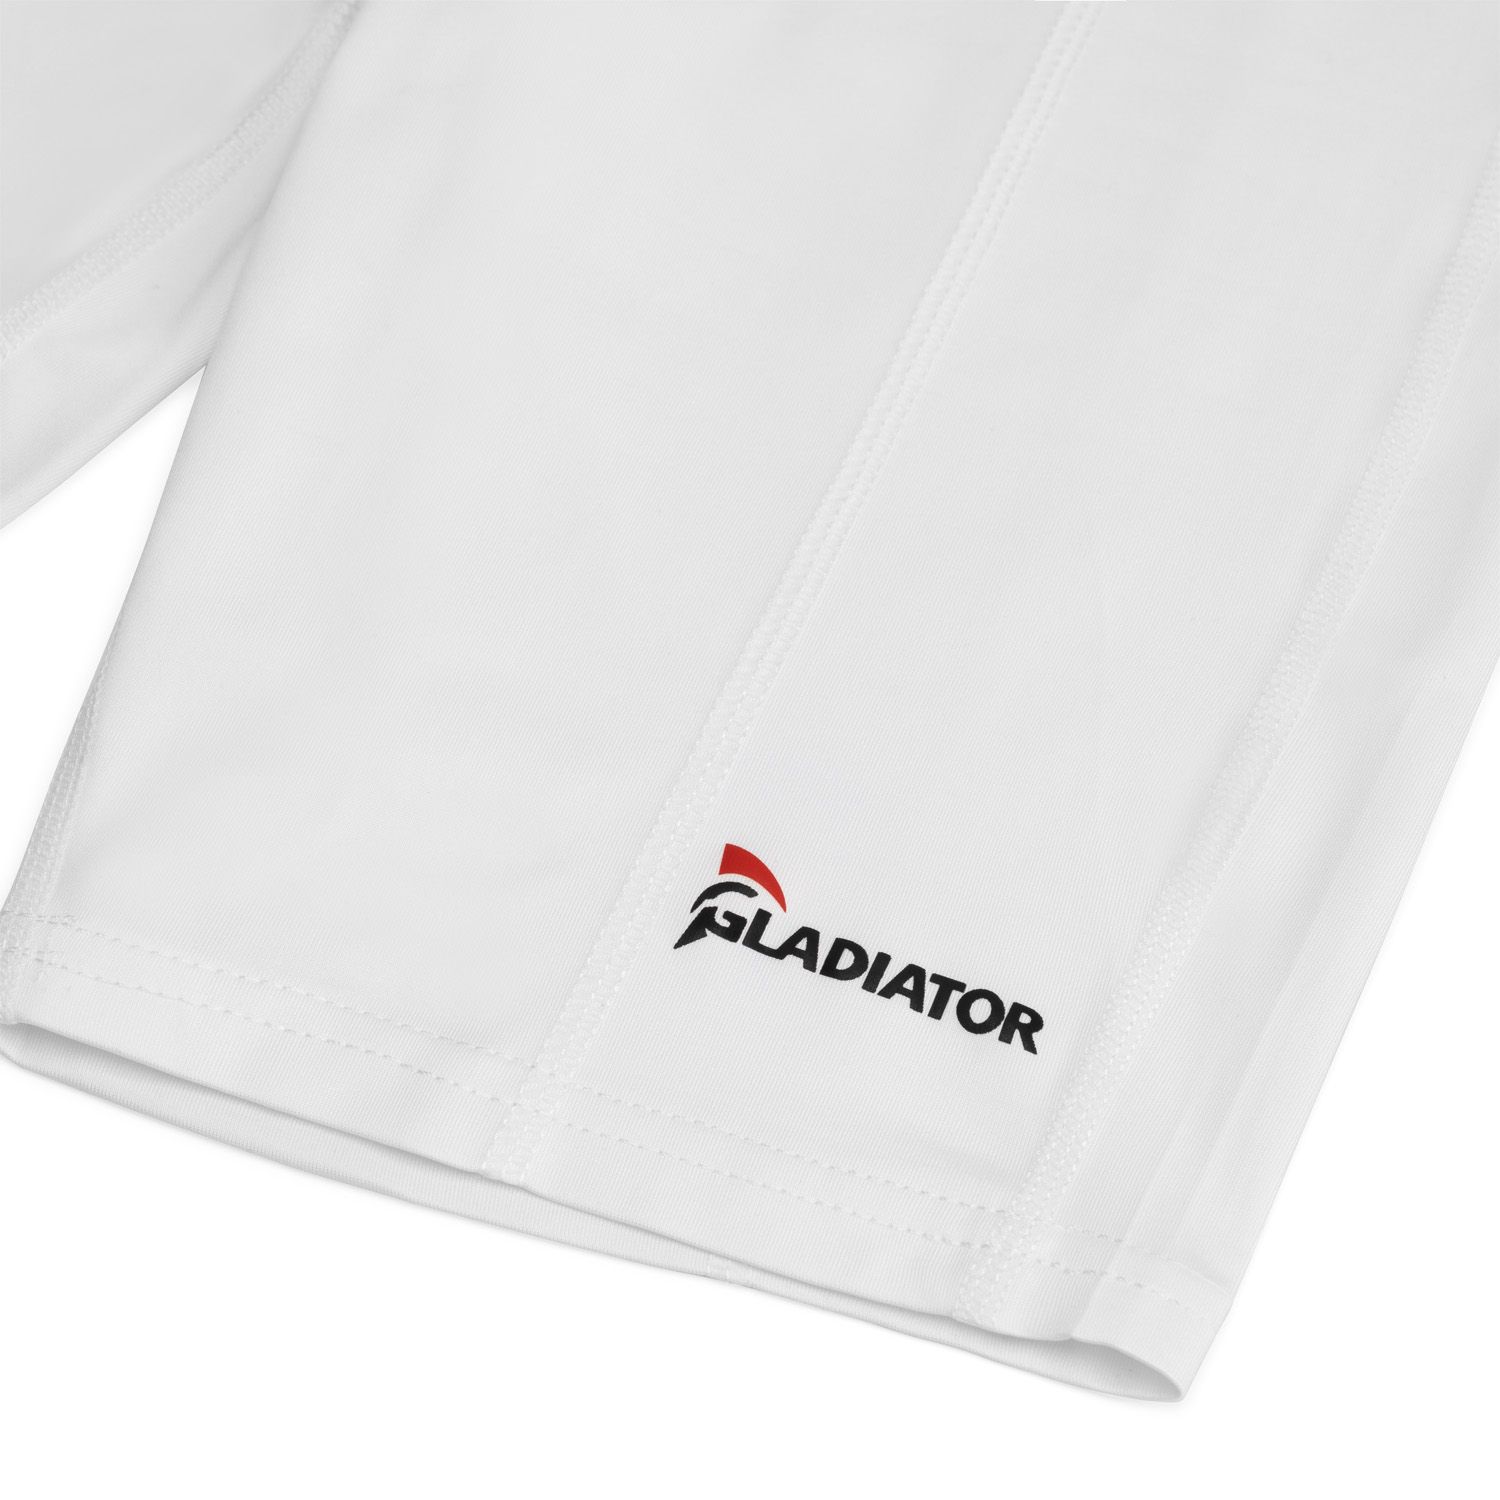 gladiator sports womens compression shorts in white detail photo logo